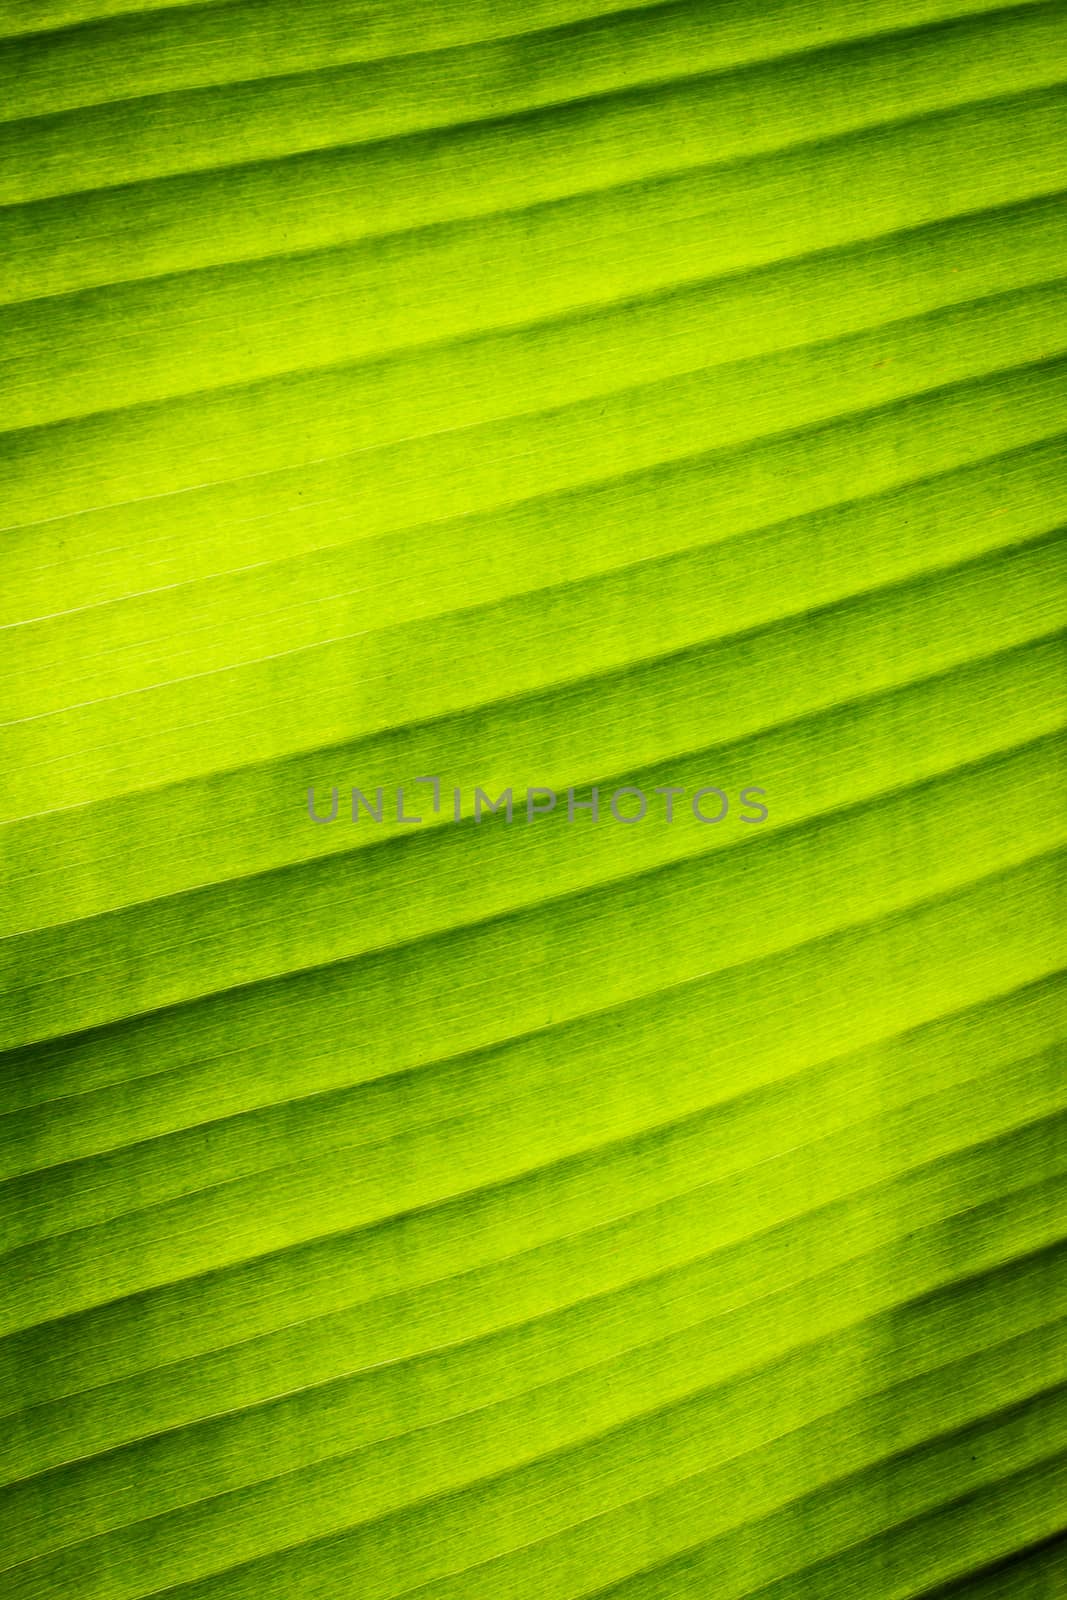 Green banana leaf texture by vitawin